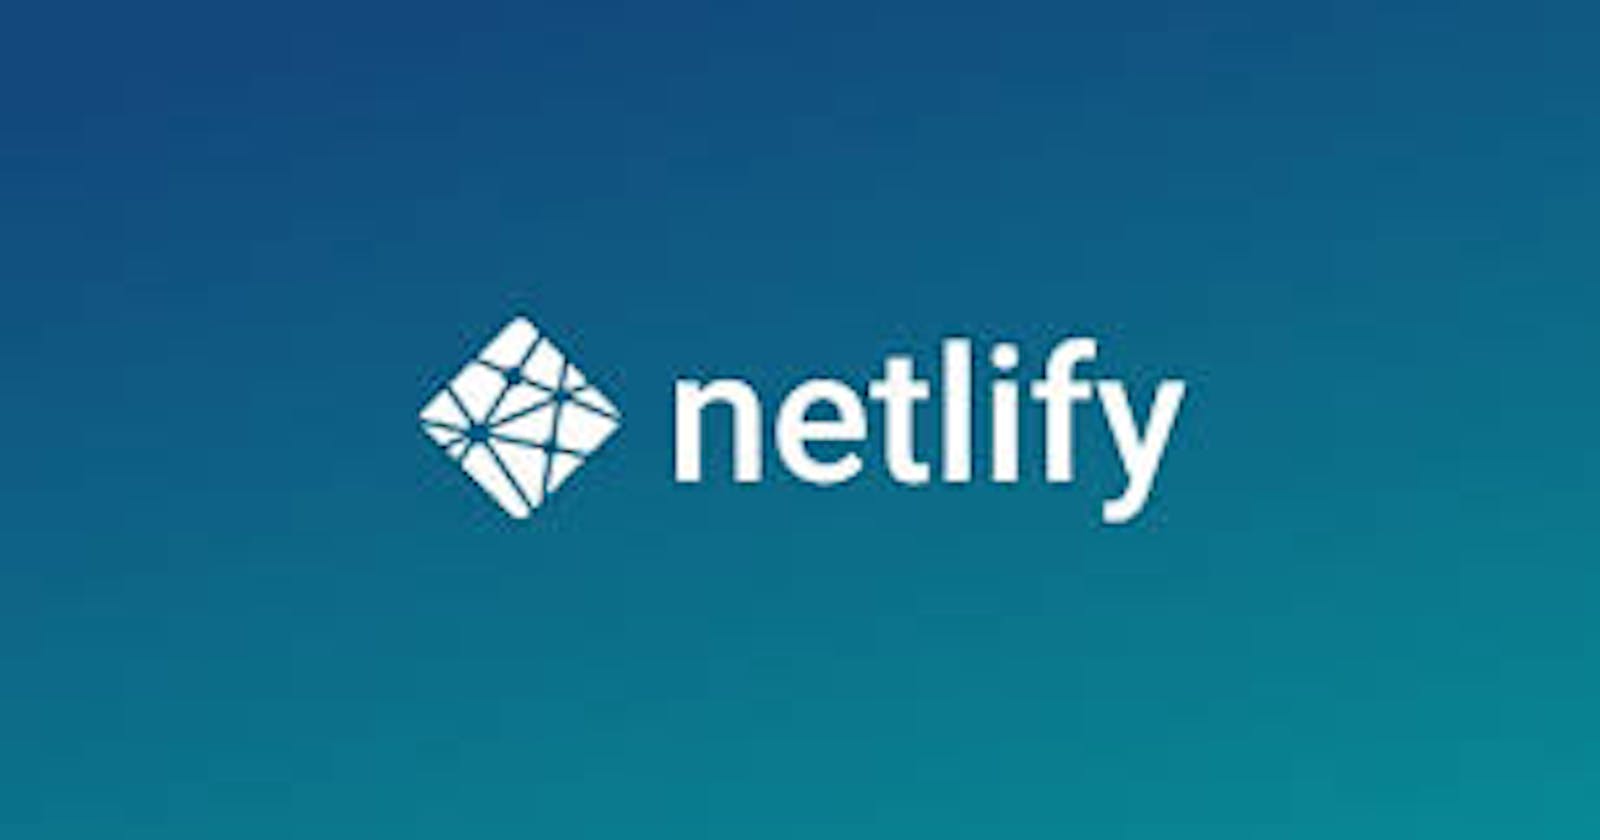 Breeze through deployment using Netlify